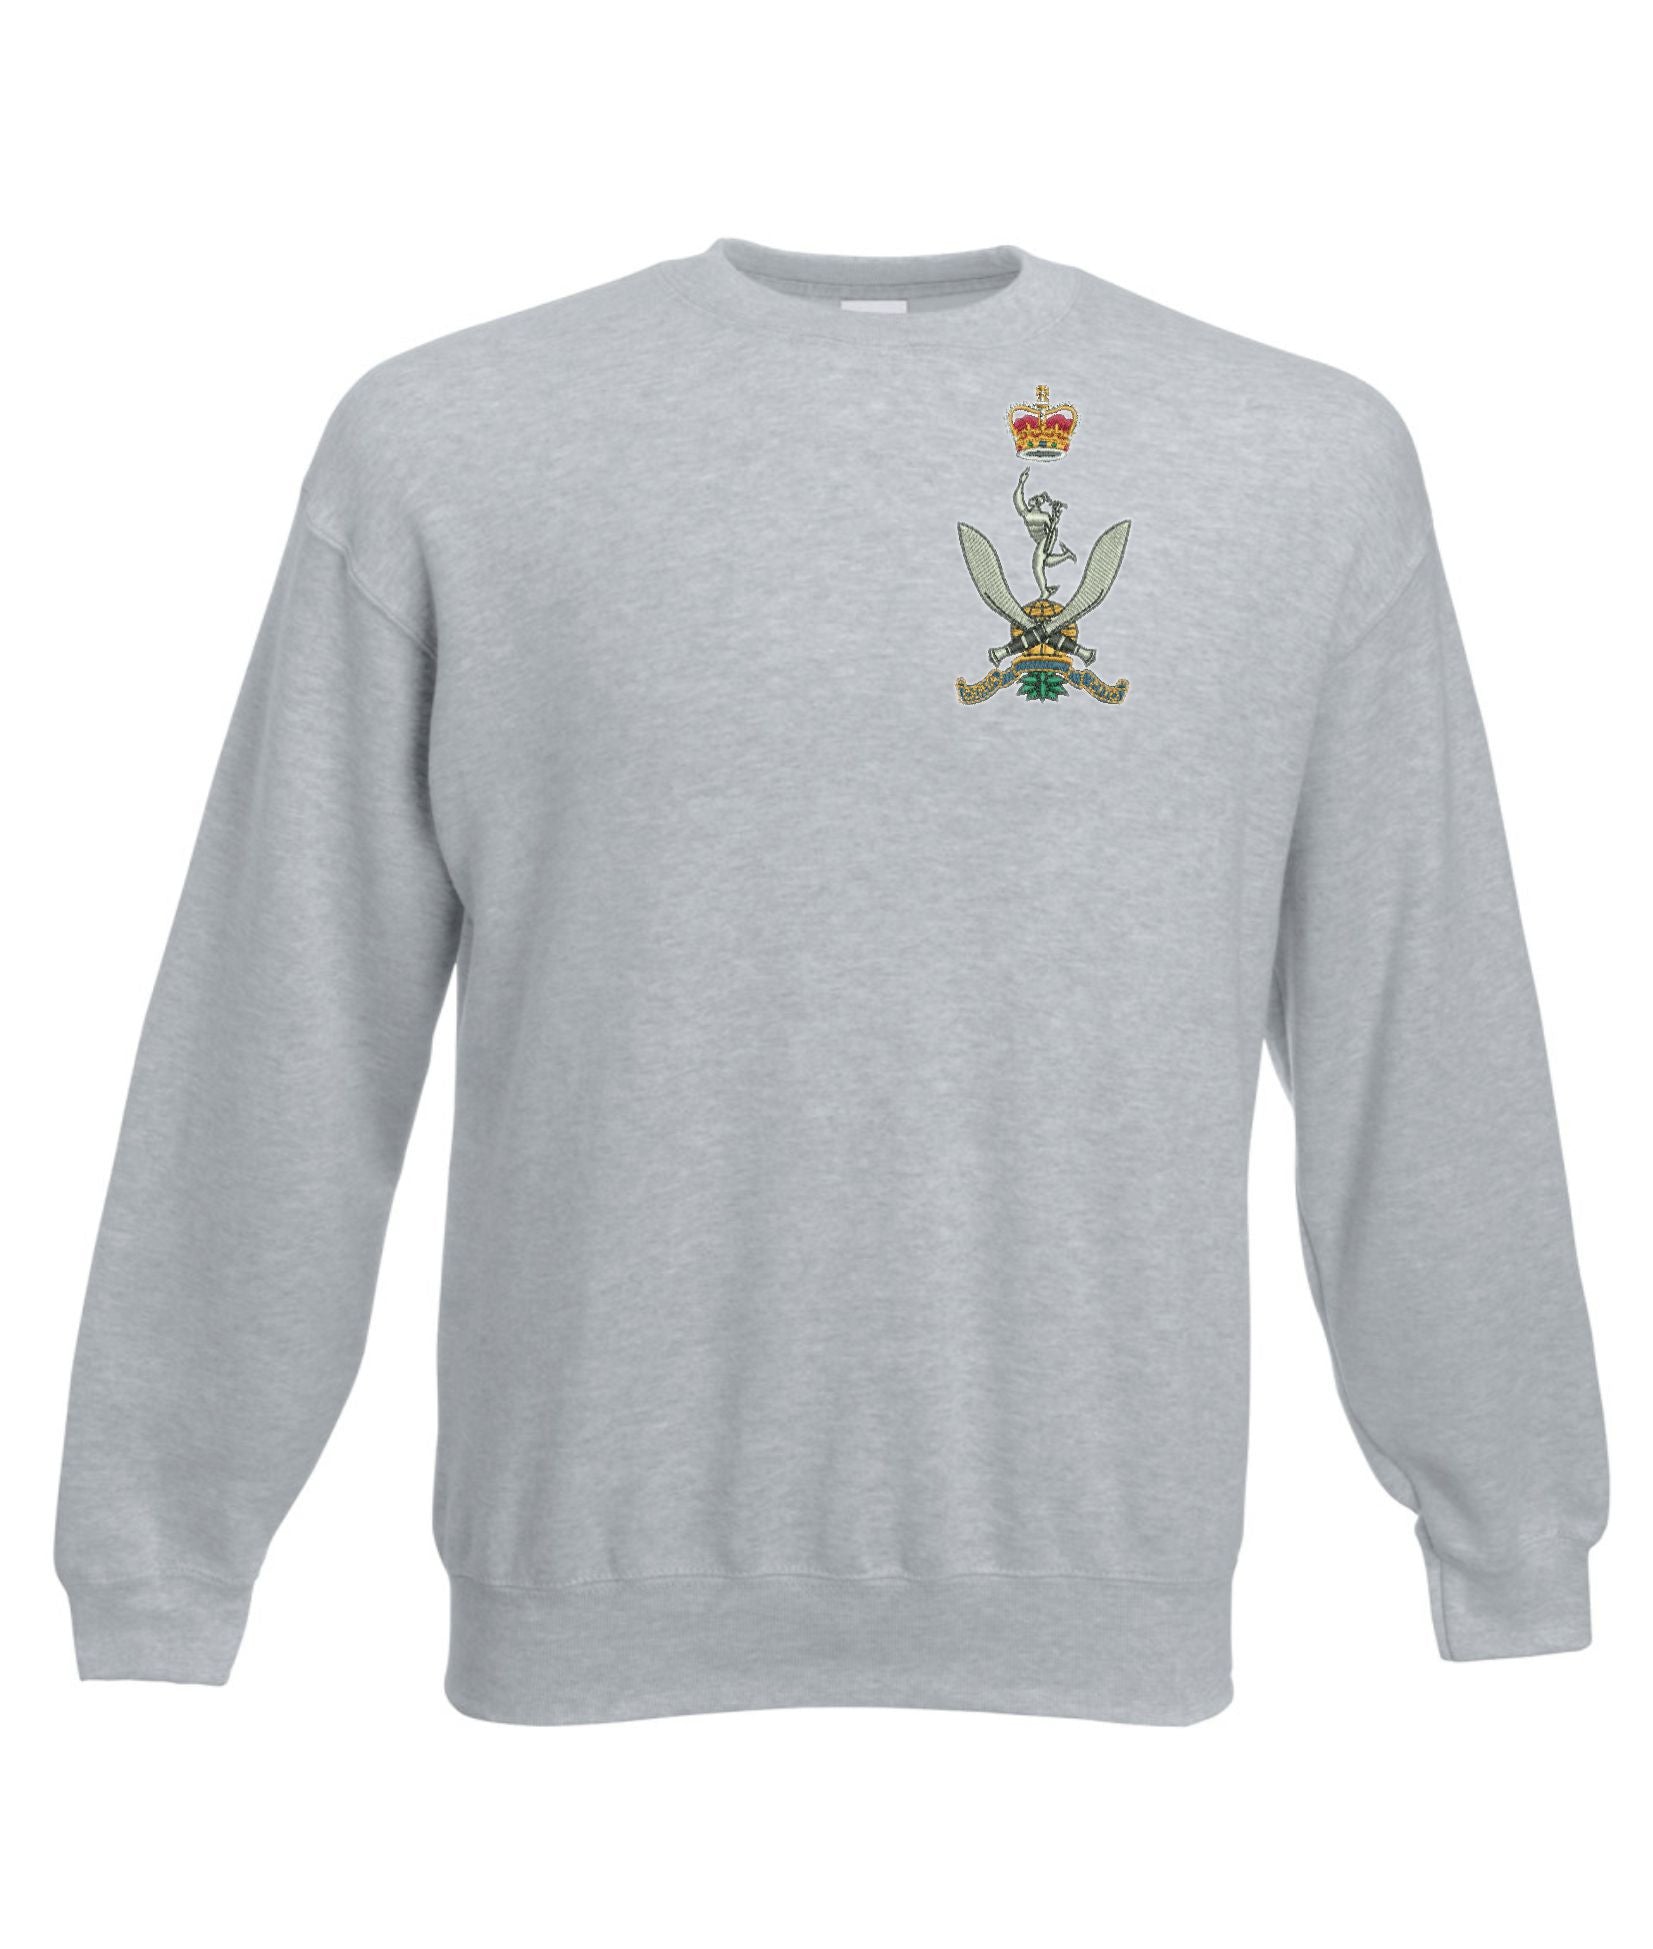 Queen's Gurkha Signals Sweatshirts